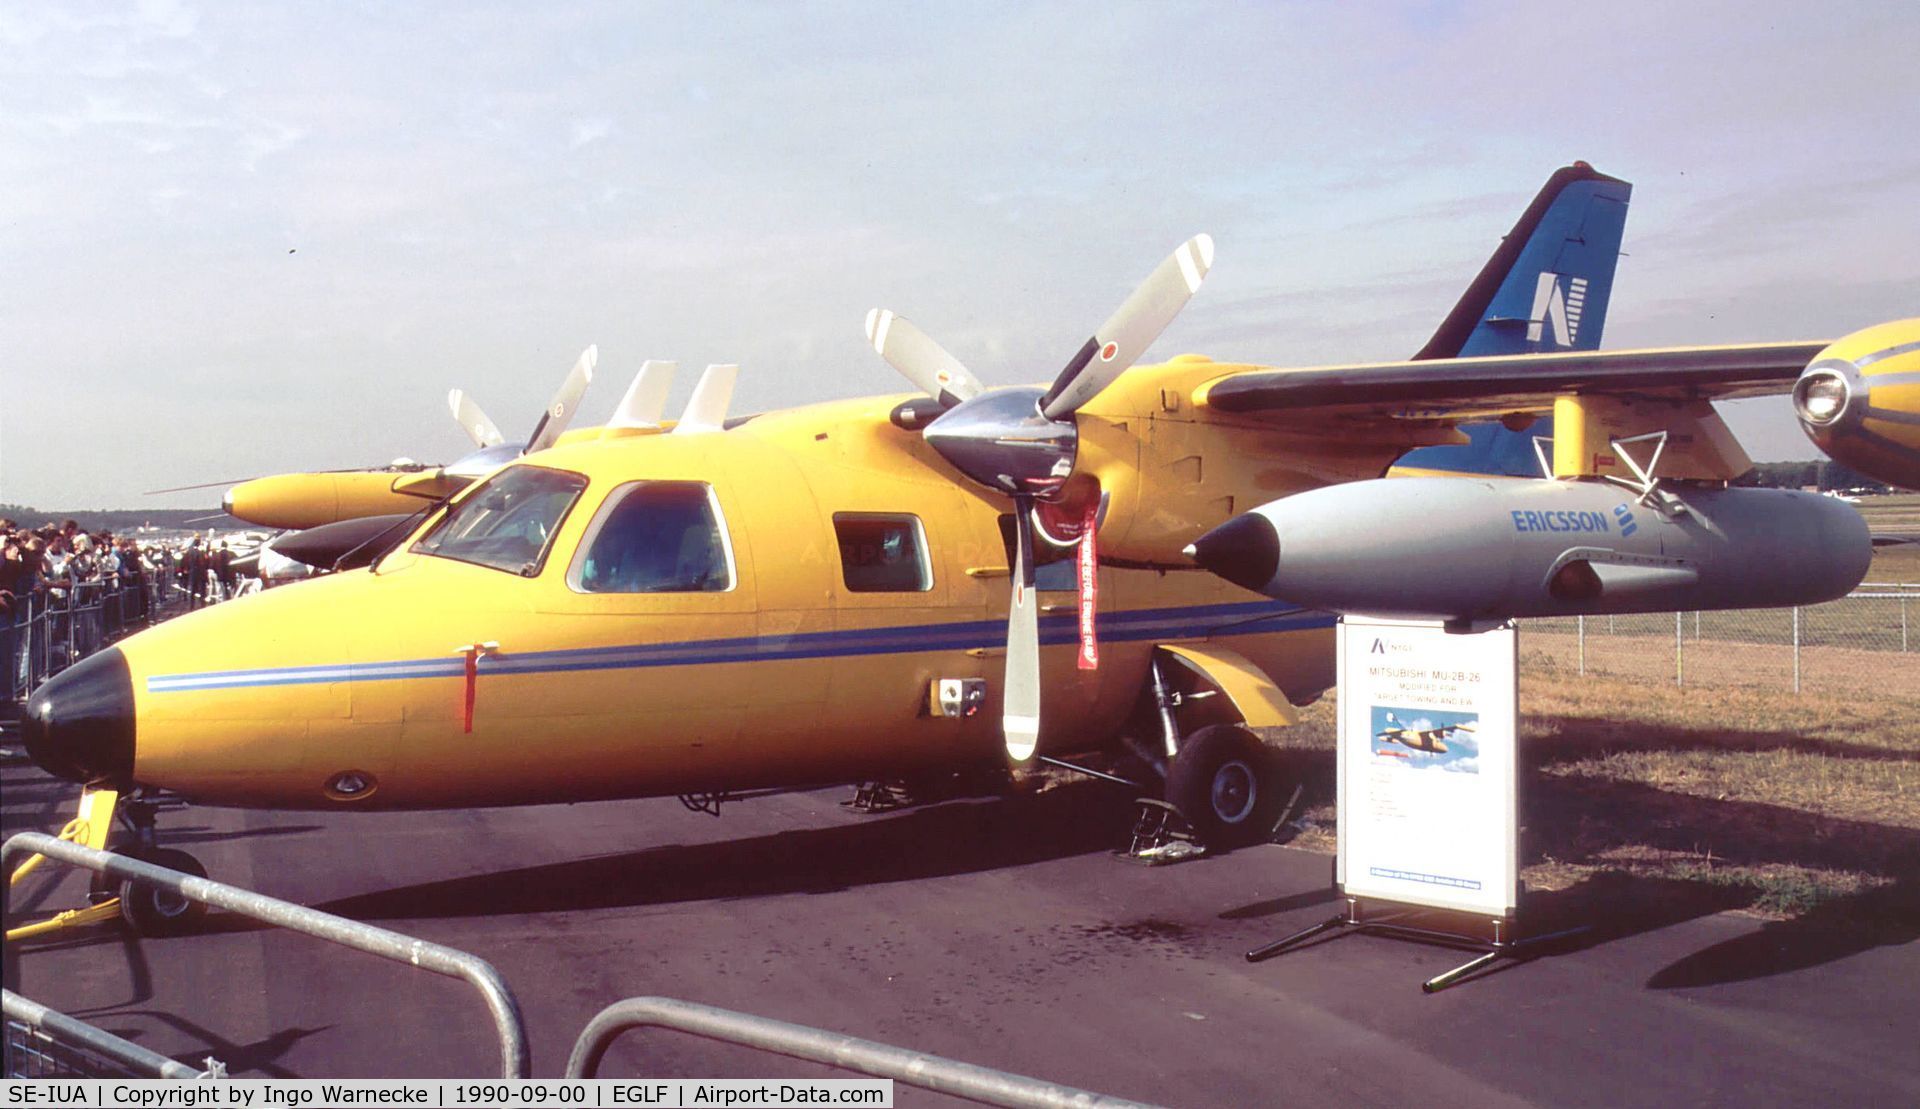 SE-IUA, 1976 Mitsubishi MU-2B-26 C/N 345, Mitsubishi MU-2B-26 of NYGE for traget towing at Farnborough International 1990